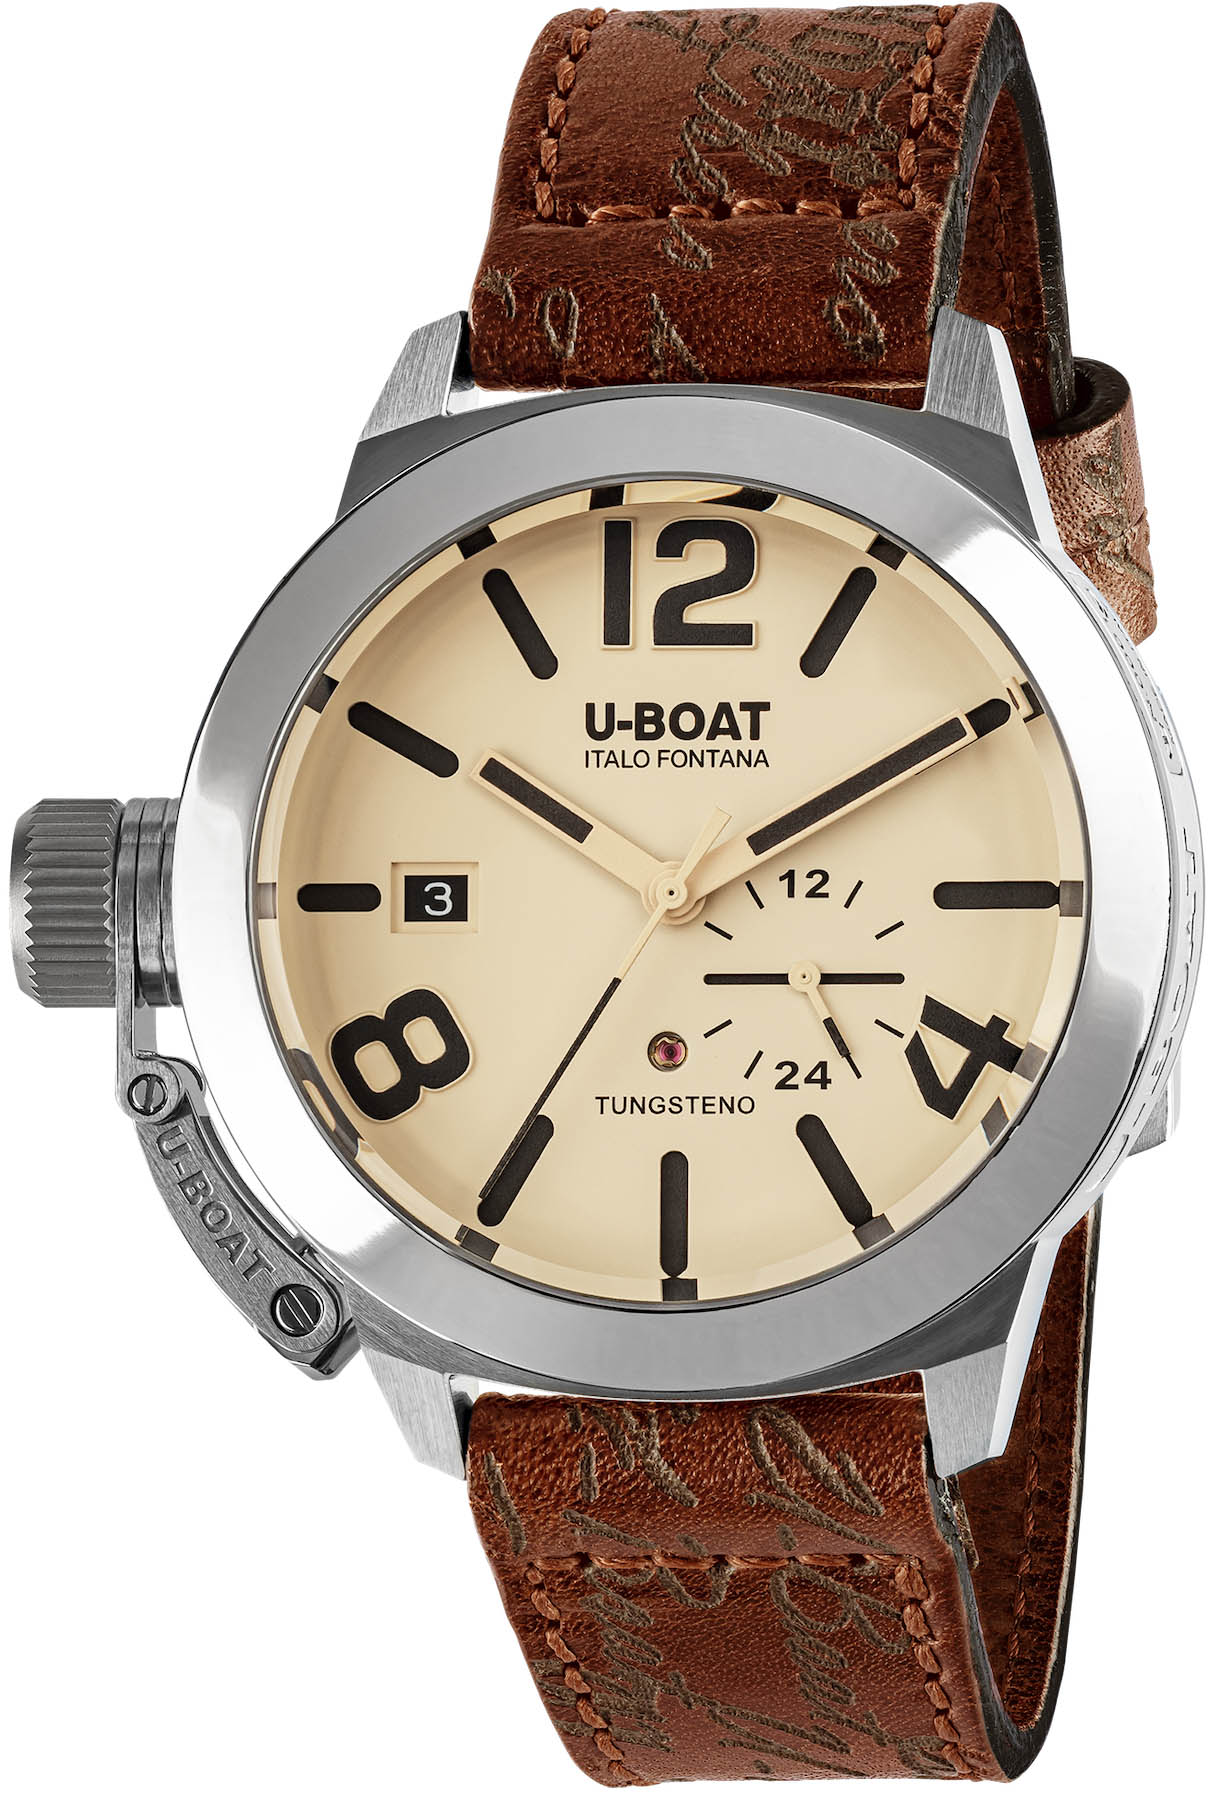 Photos - Wrist Watch U-Boat Watch Classico 42 Tungsten Beige UB-1035 